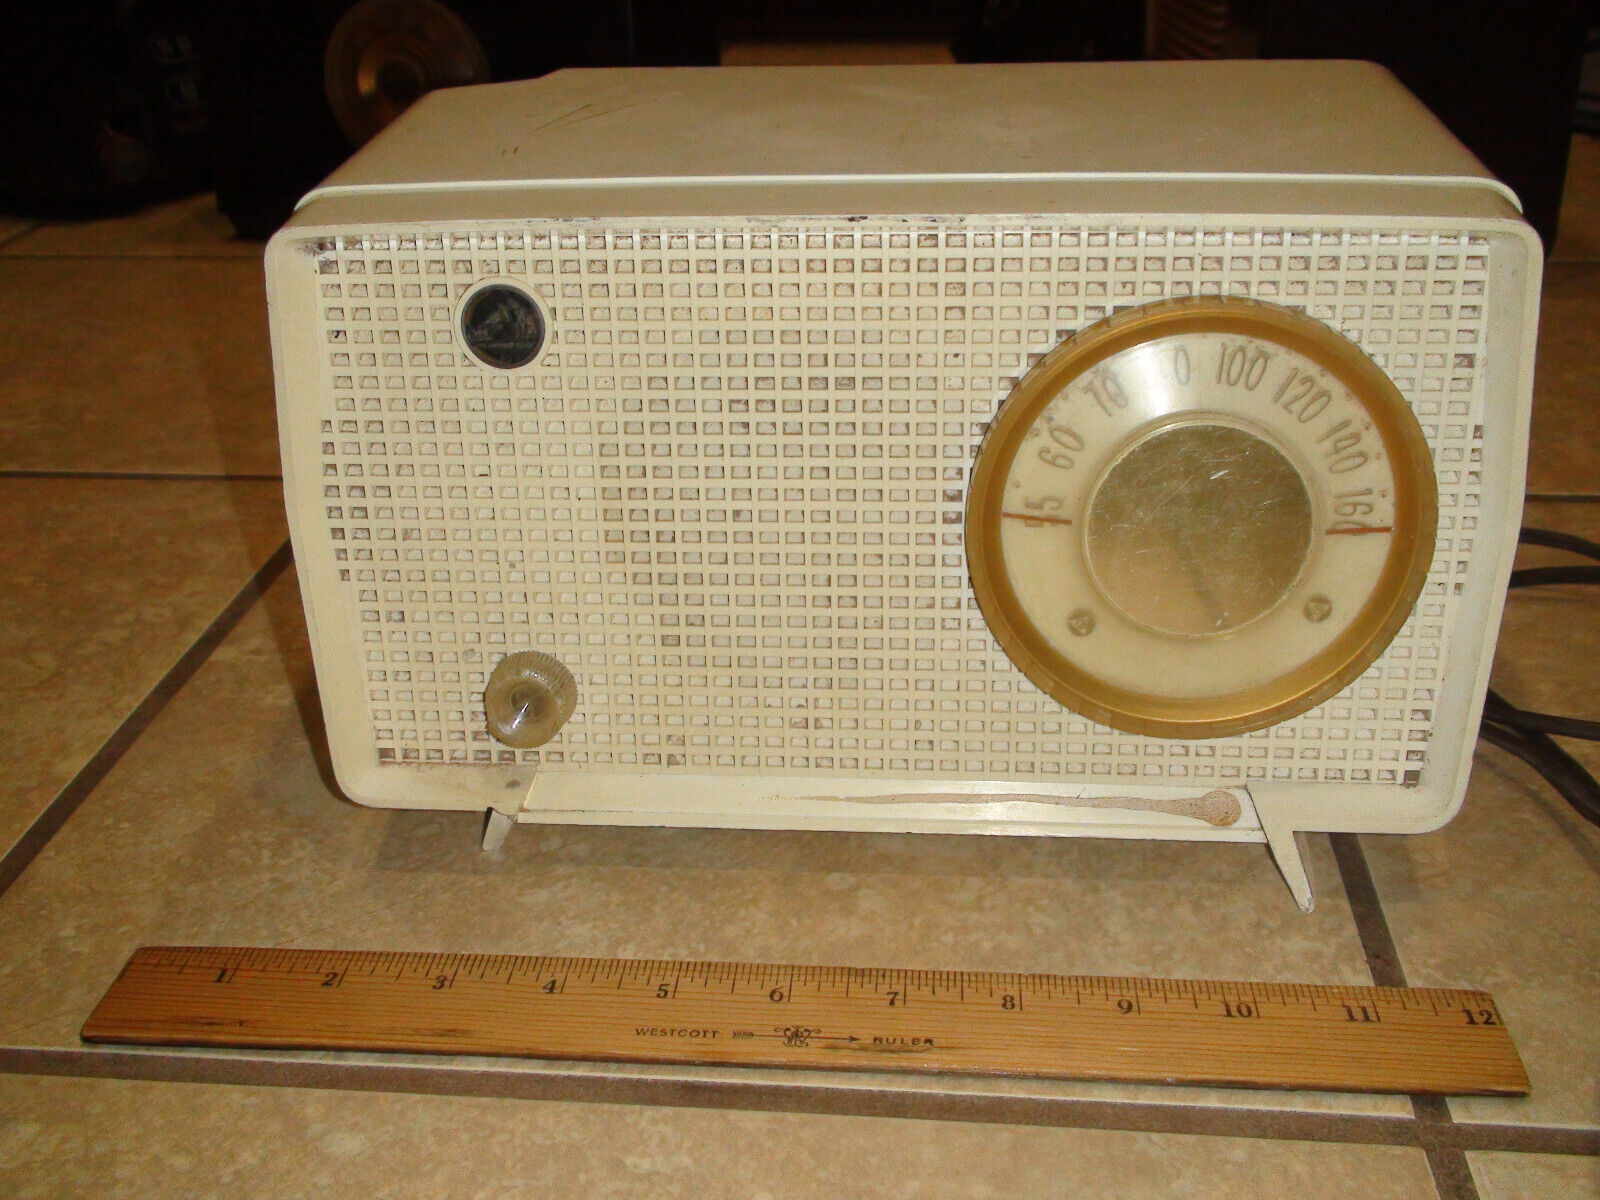 Model 6-X-7 RCA Victor Golden Throat AM Radio 1956-1957 - Powers On